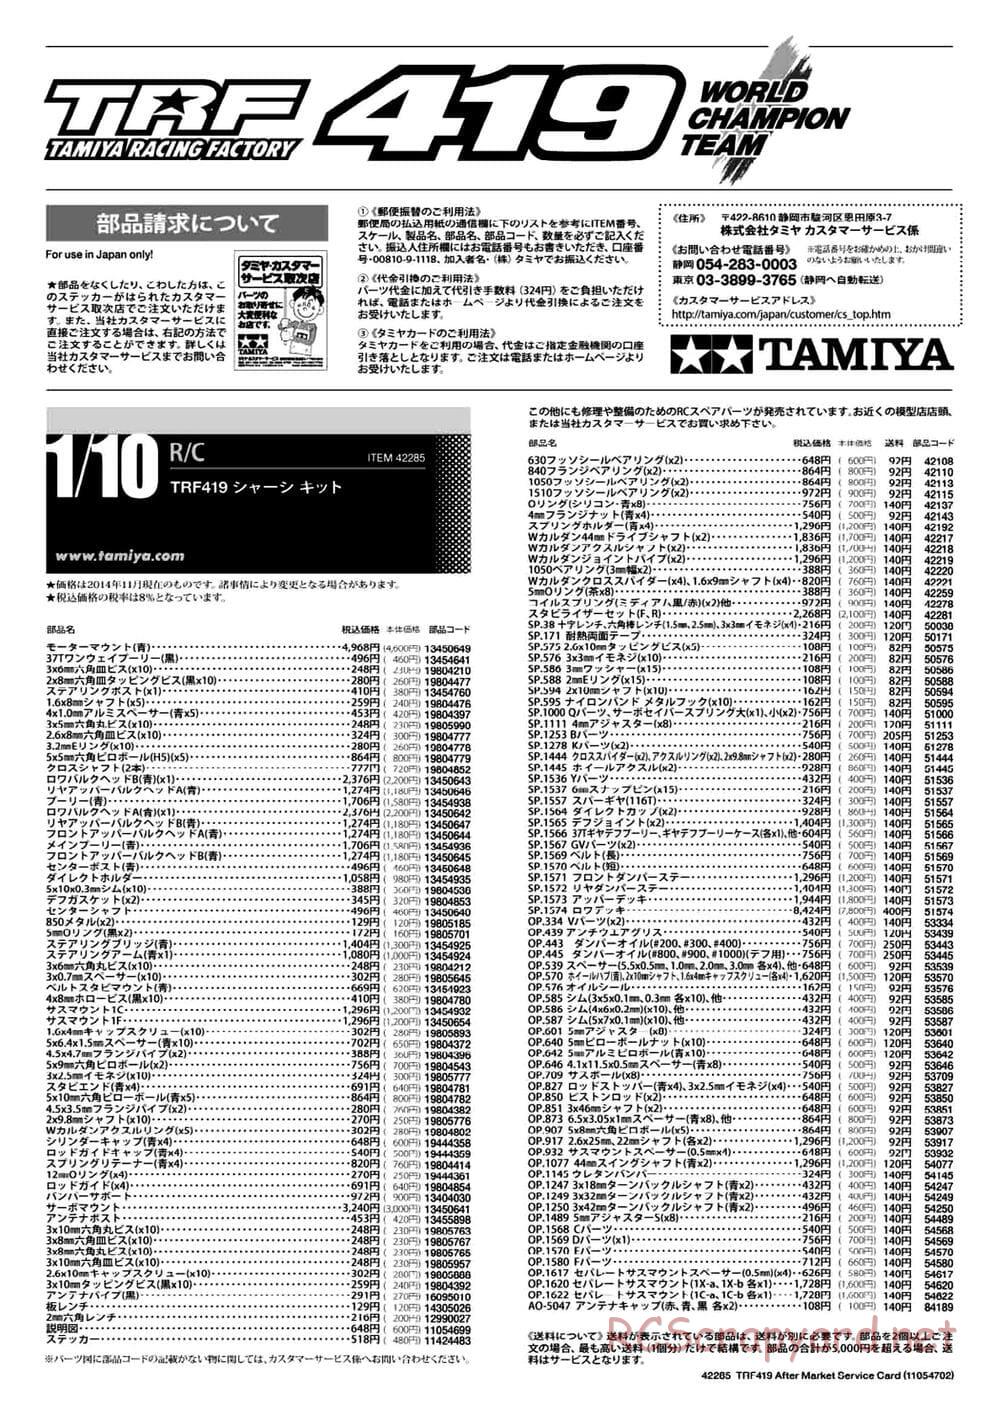 Tamiya - TRF419 Chassis - Manual - Page 29